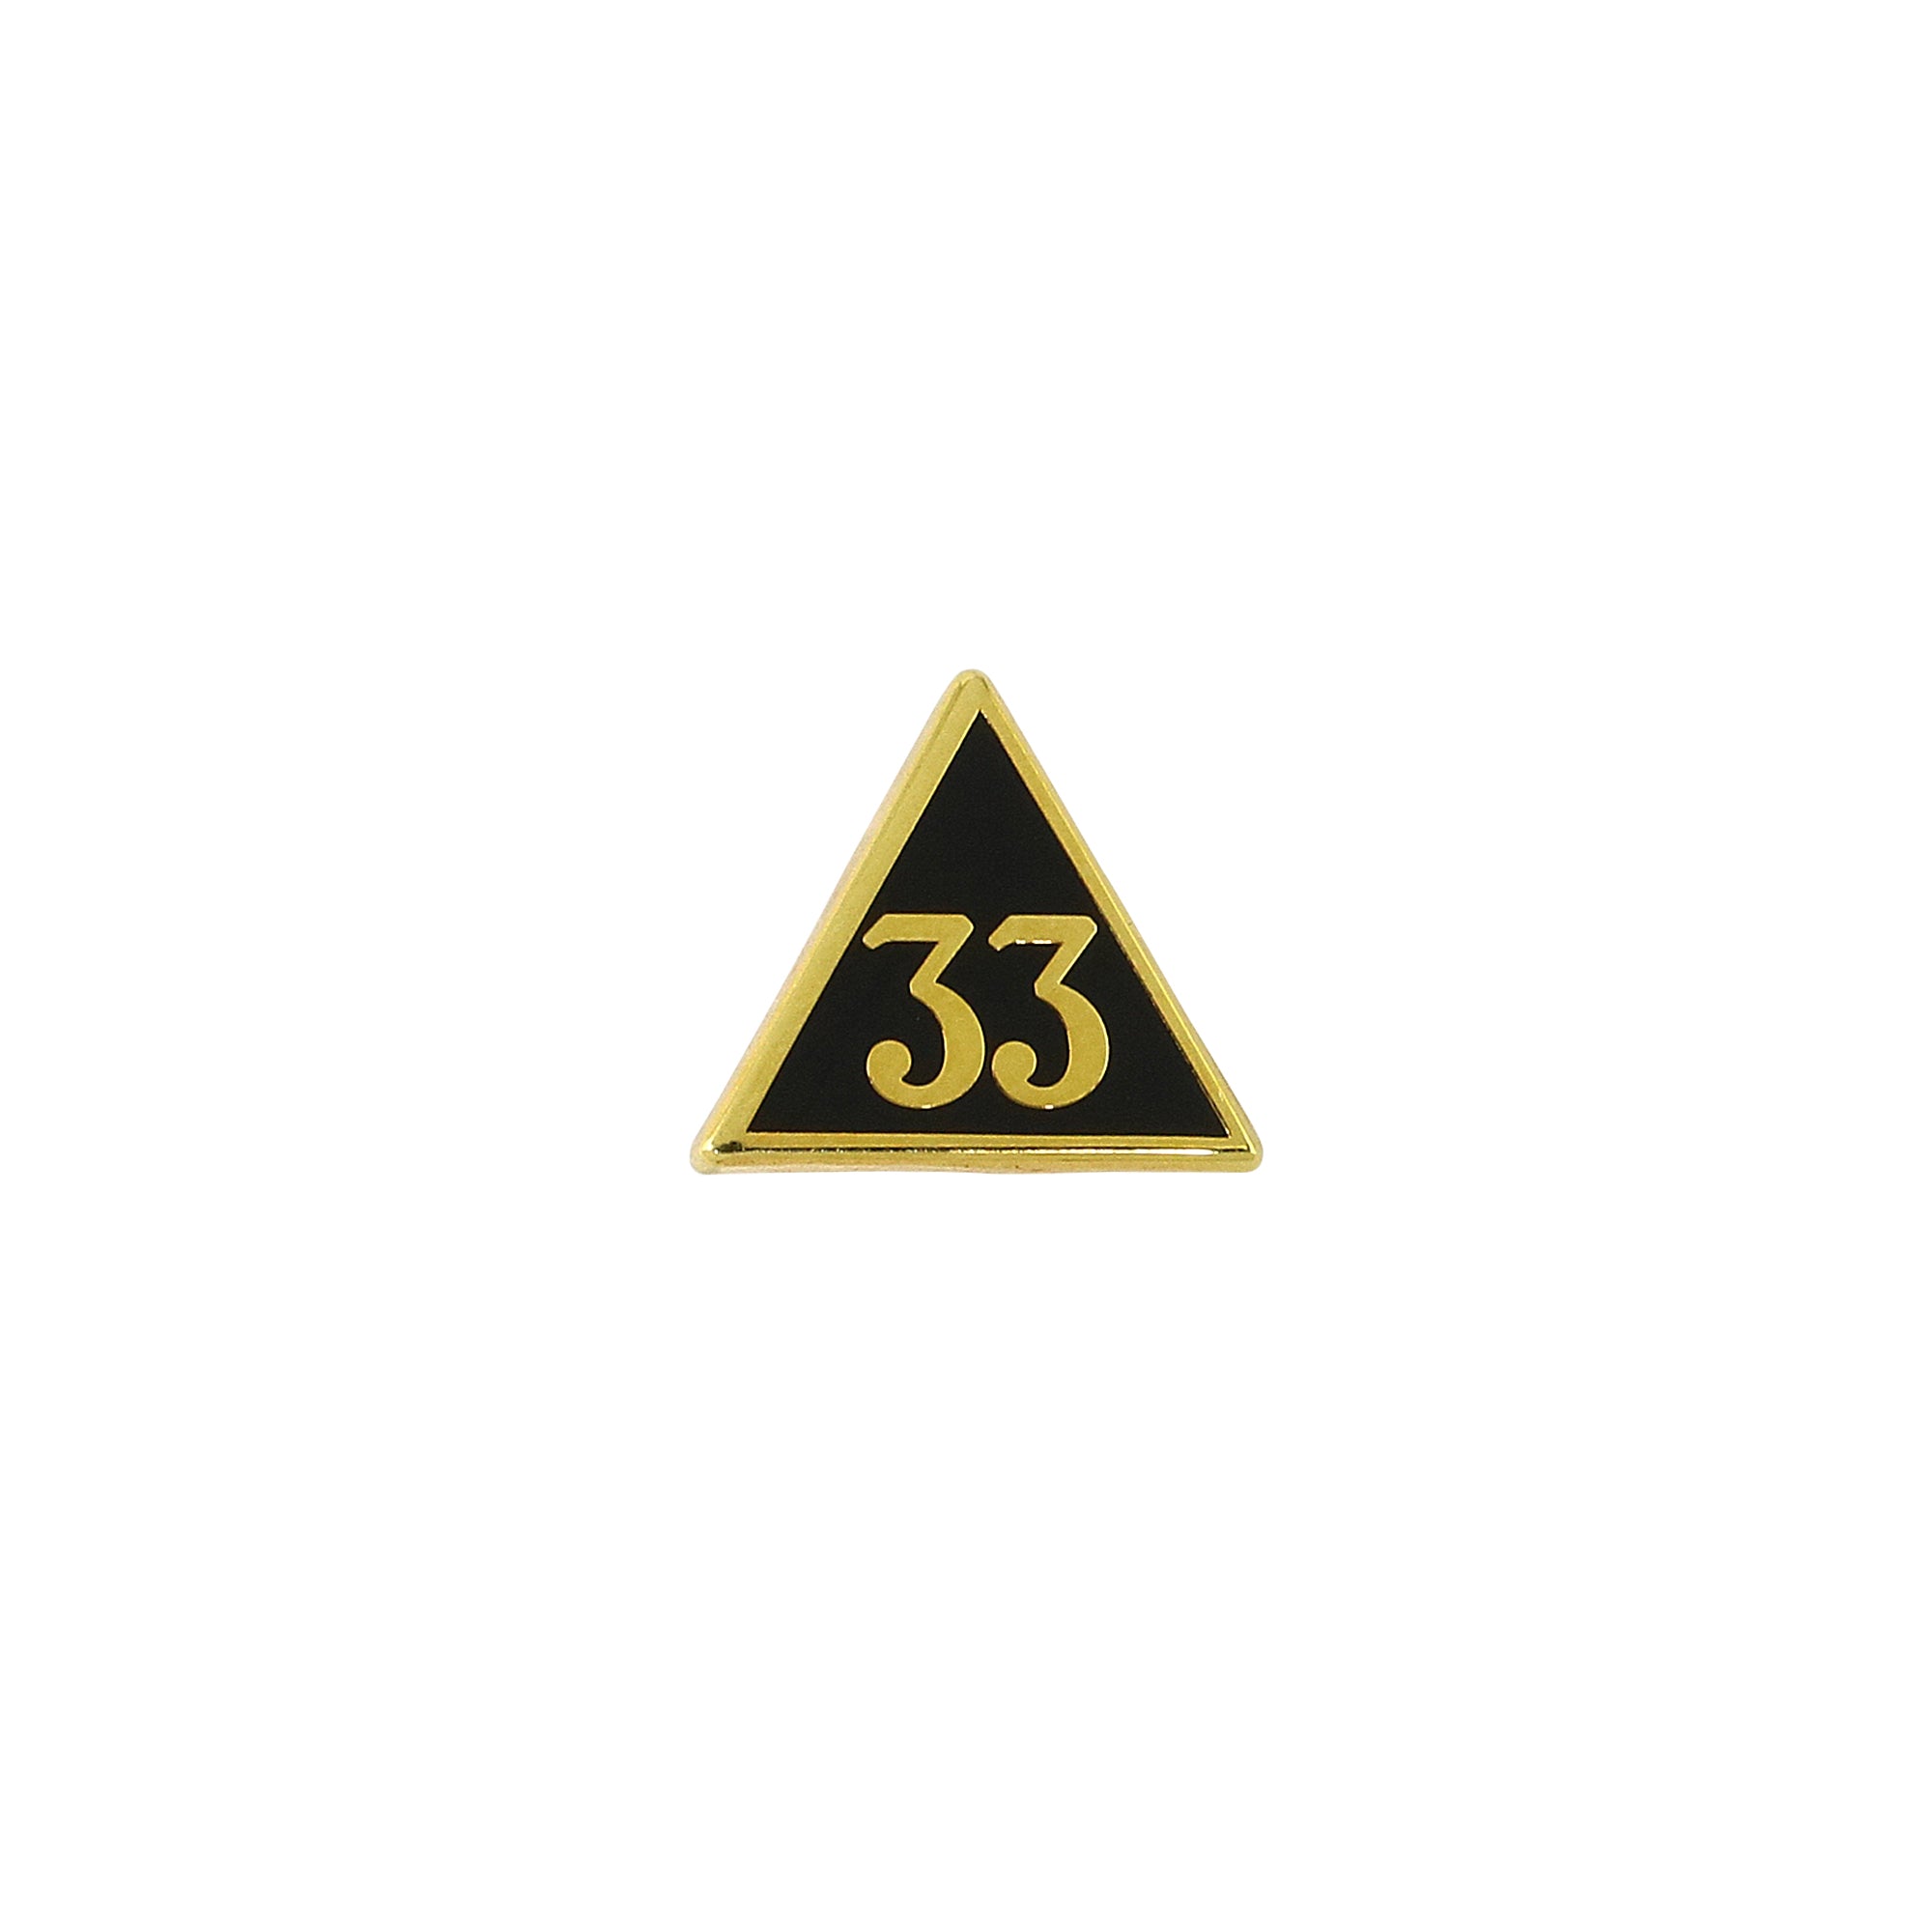 33rd Degree Triangle Lapel Pin